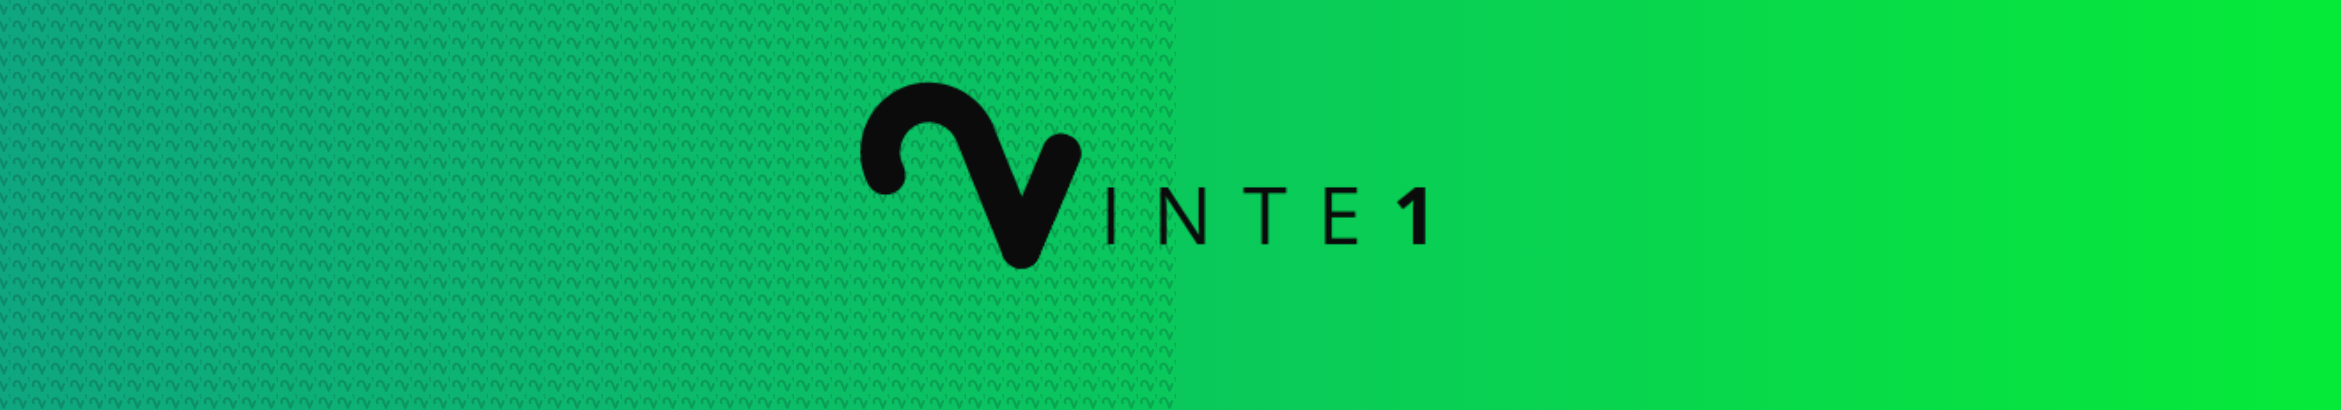 Vinte1 Design profil başlığı